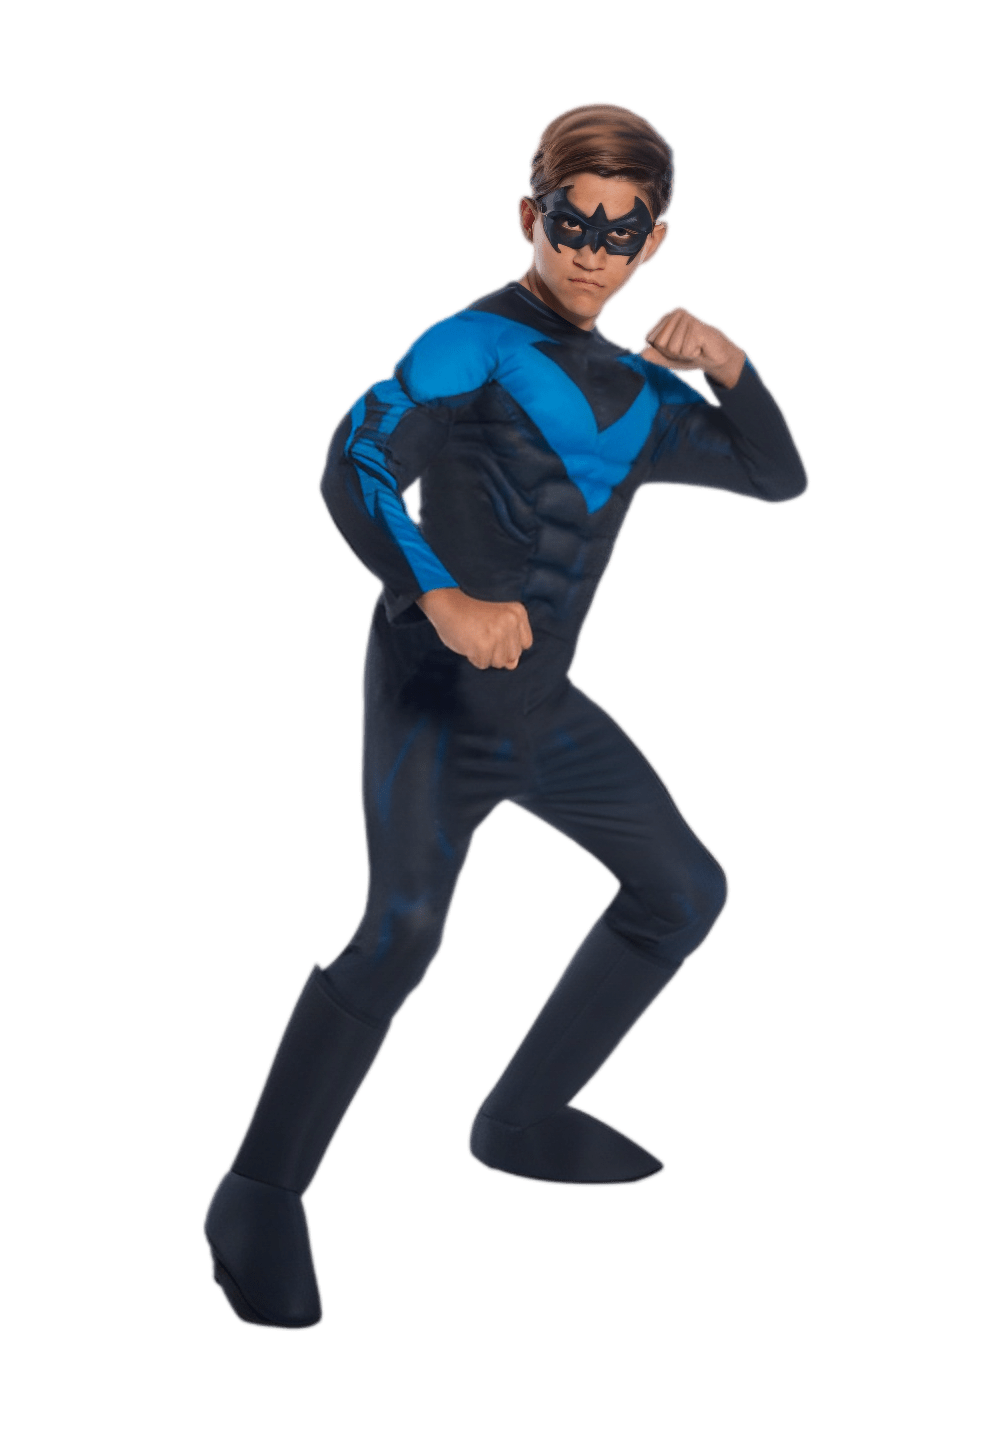 Nightwing Costume